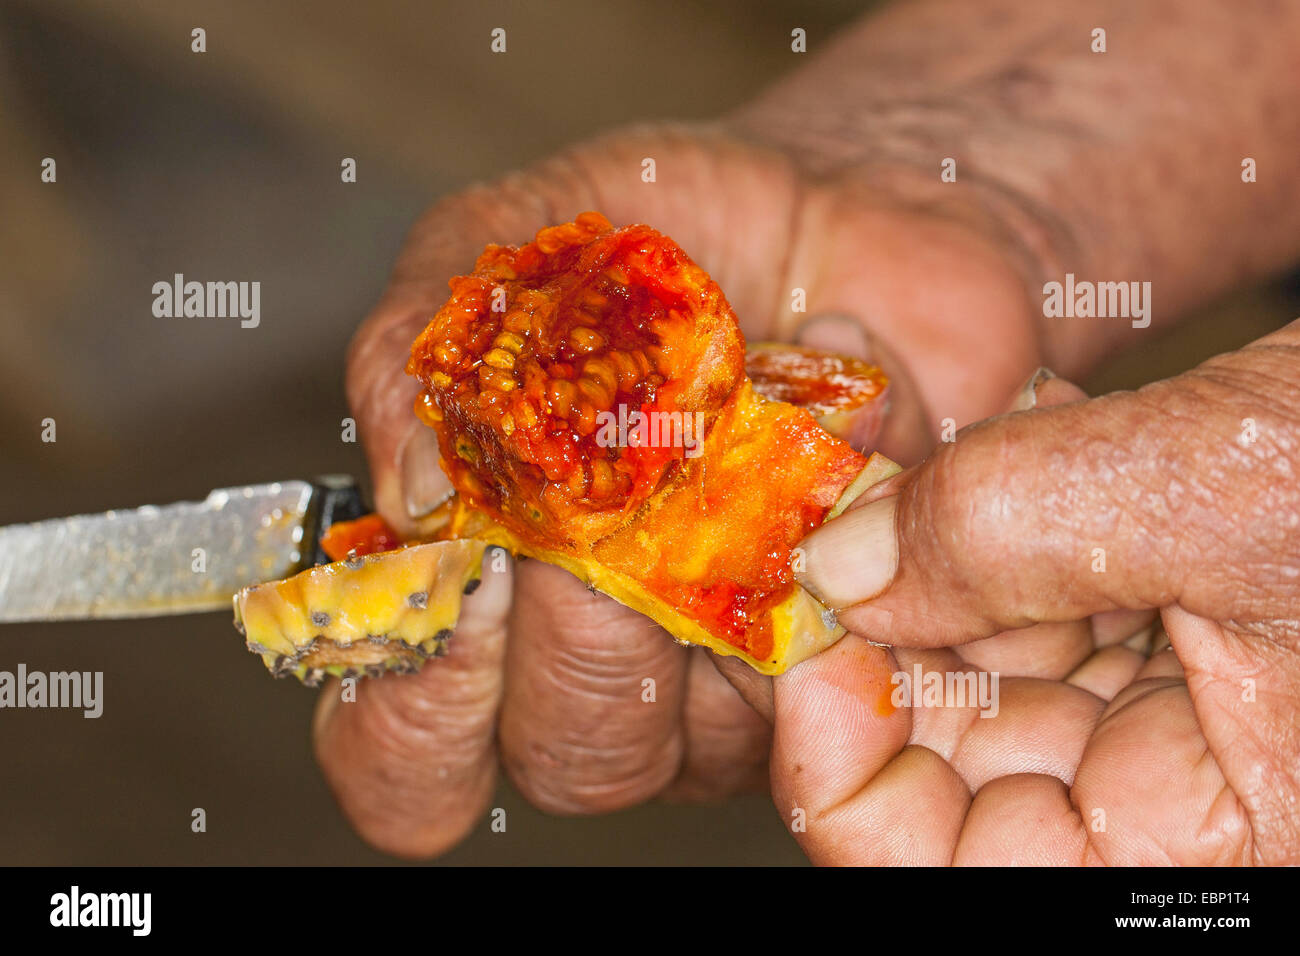 Fig indien, figuier de Barbarie (Opuntia ficus-indica, Opuntia ficus-barbarica), des fruits est coupé en tranches Banque D'Images